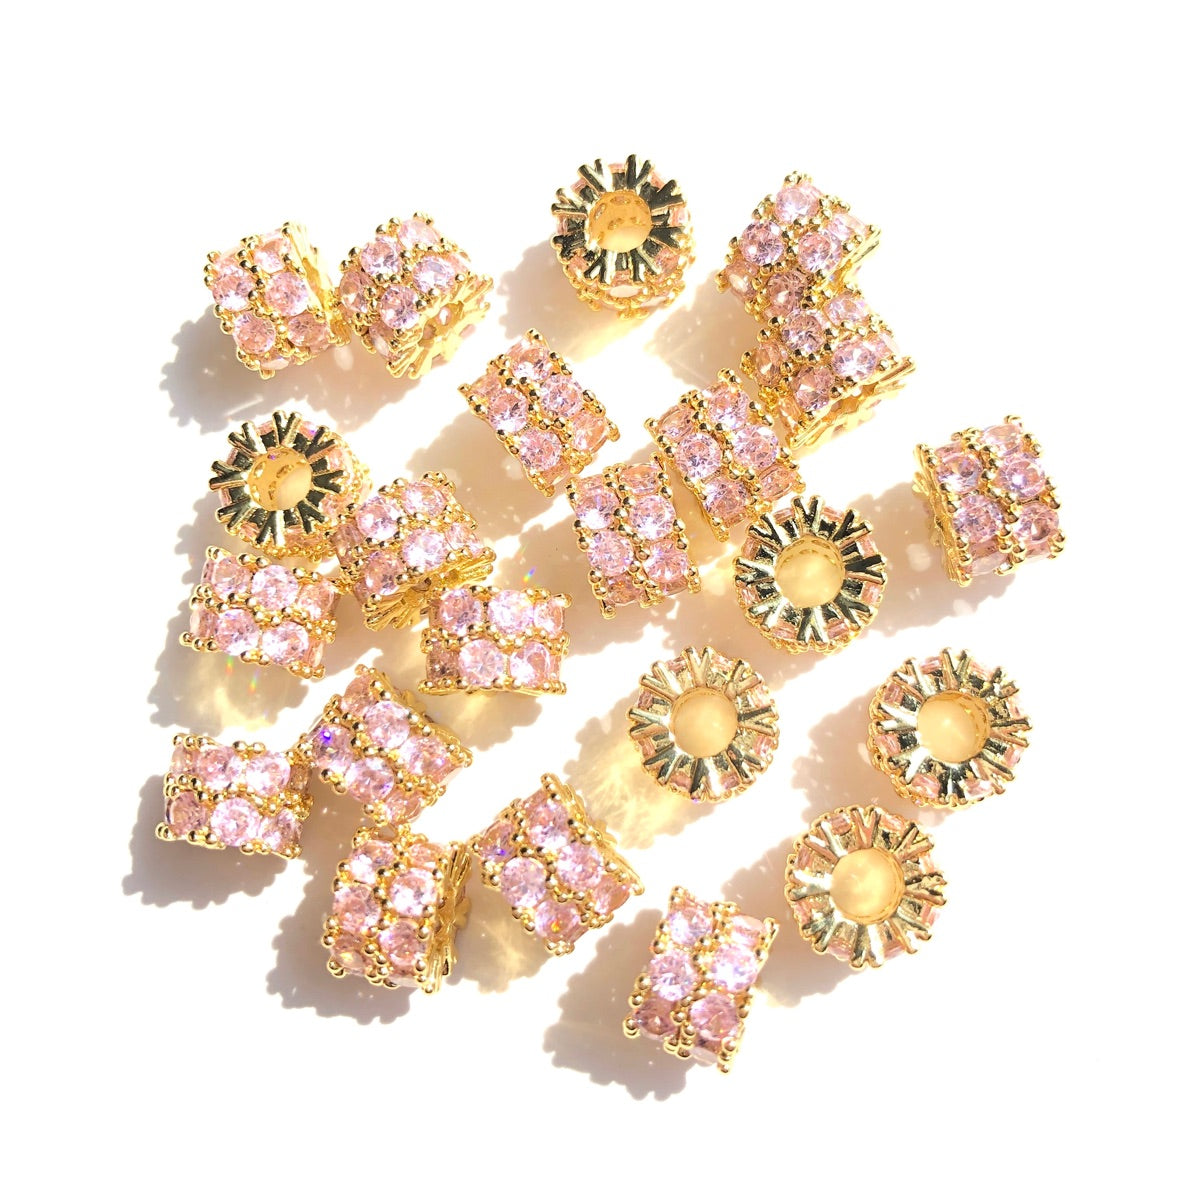 10-20-50pcs/lot 8.4mm Pink CZ Paved Big Hole Rondelle Wheel Spacers Gold CZ Paved Spacers Big Hole Beads New Spacers Arrivals Rondelle Beads Wholesale Charms Beads Beyond